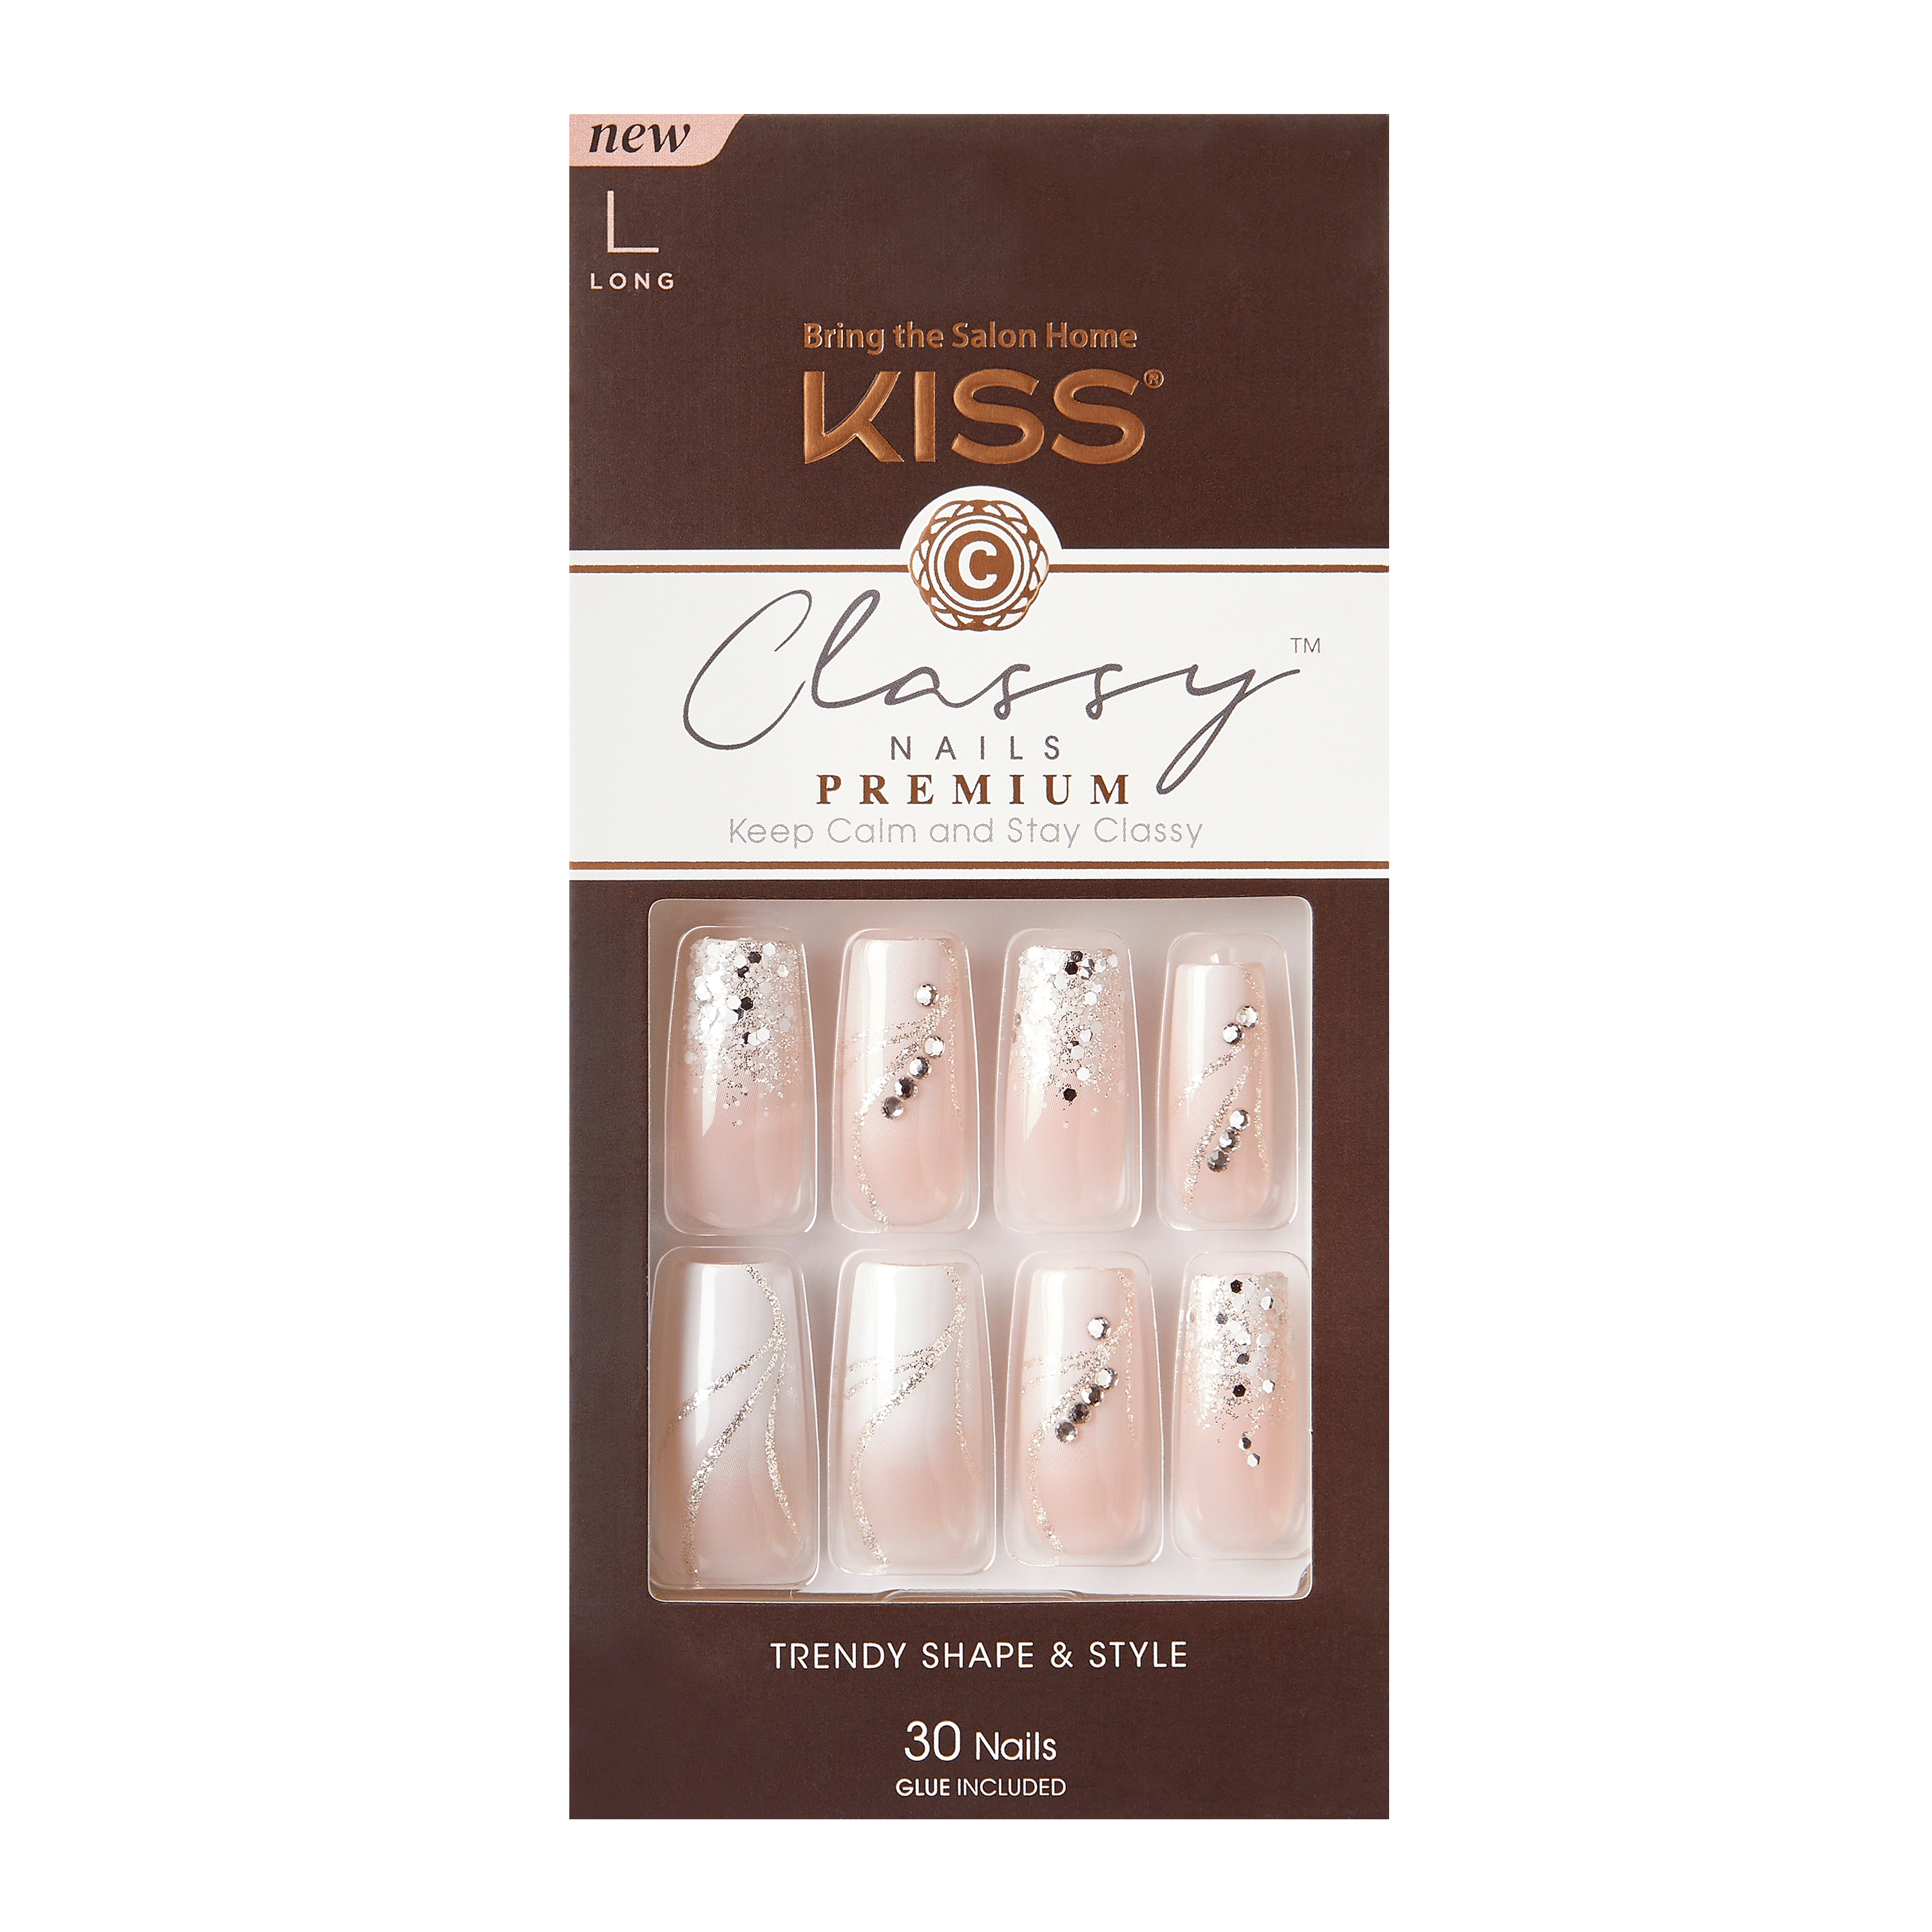 KISS Classy Premium Fake Nails, Stunning!, 30 Count - Walmart.com